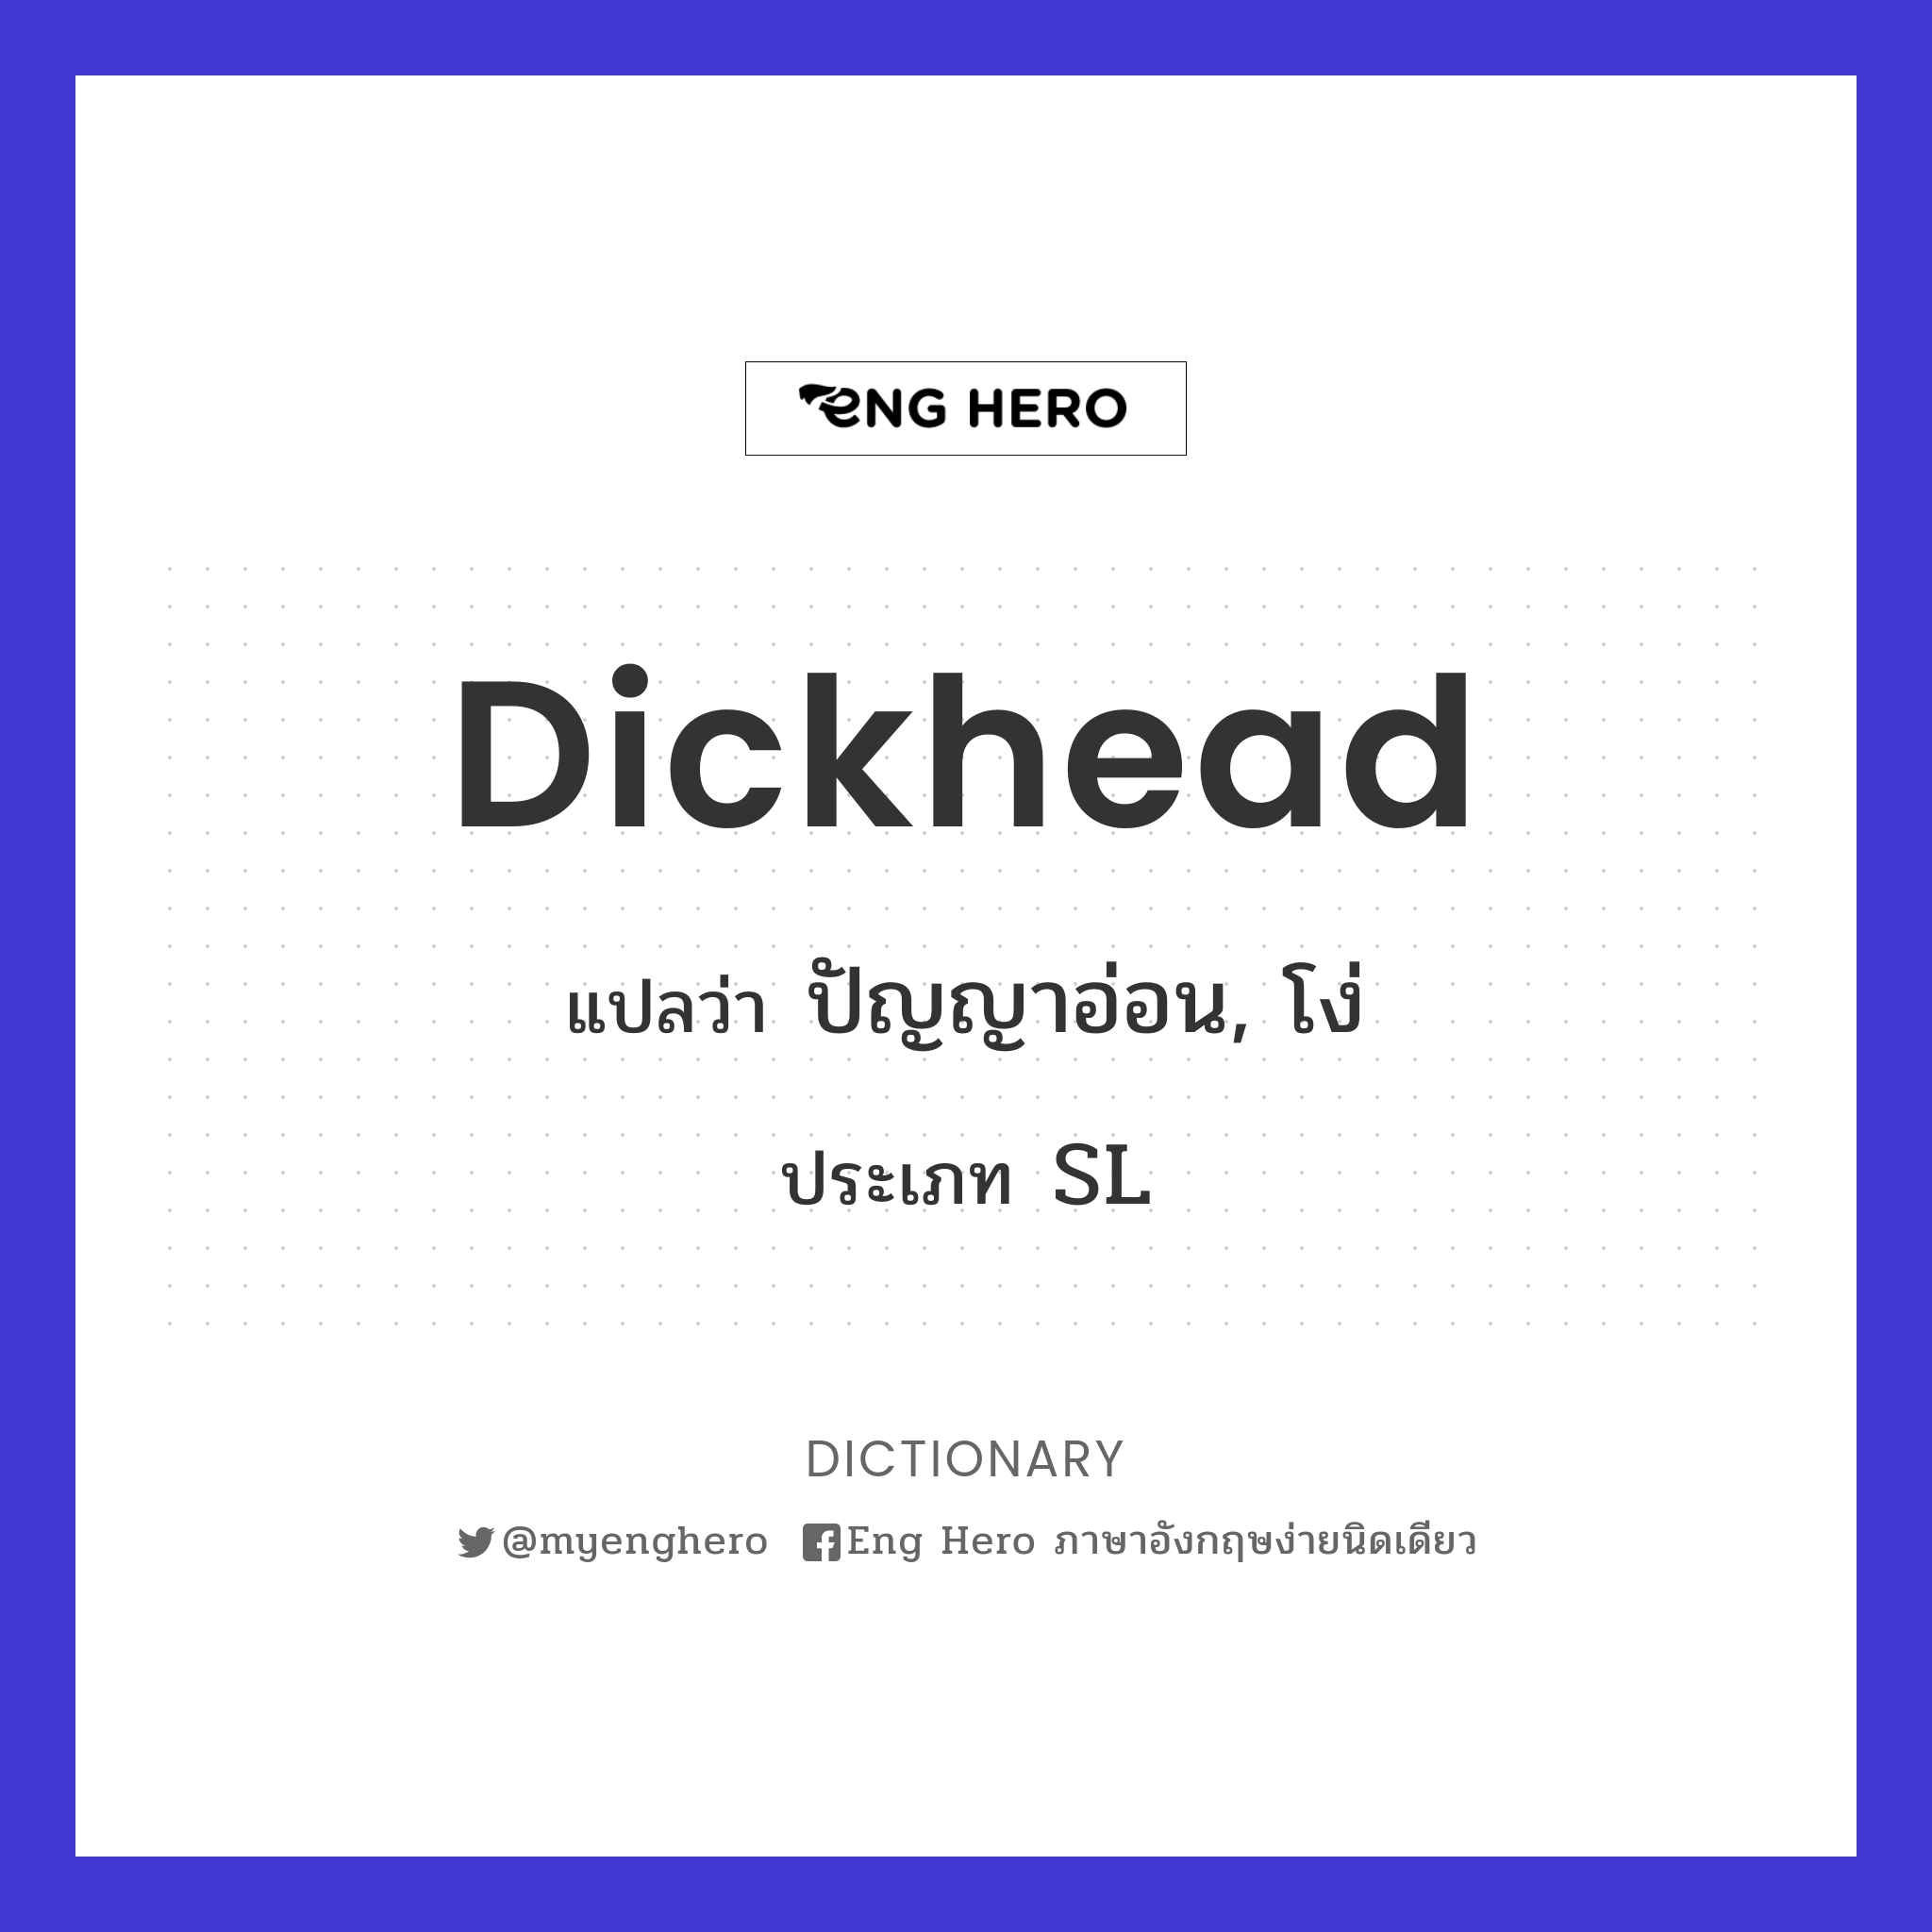 dickhead